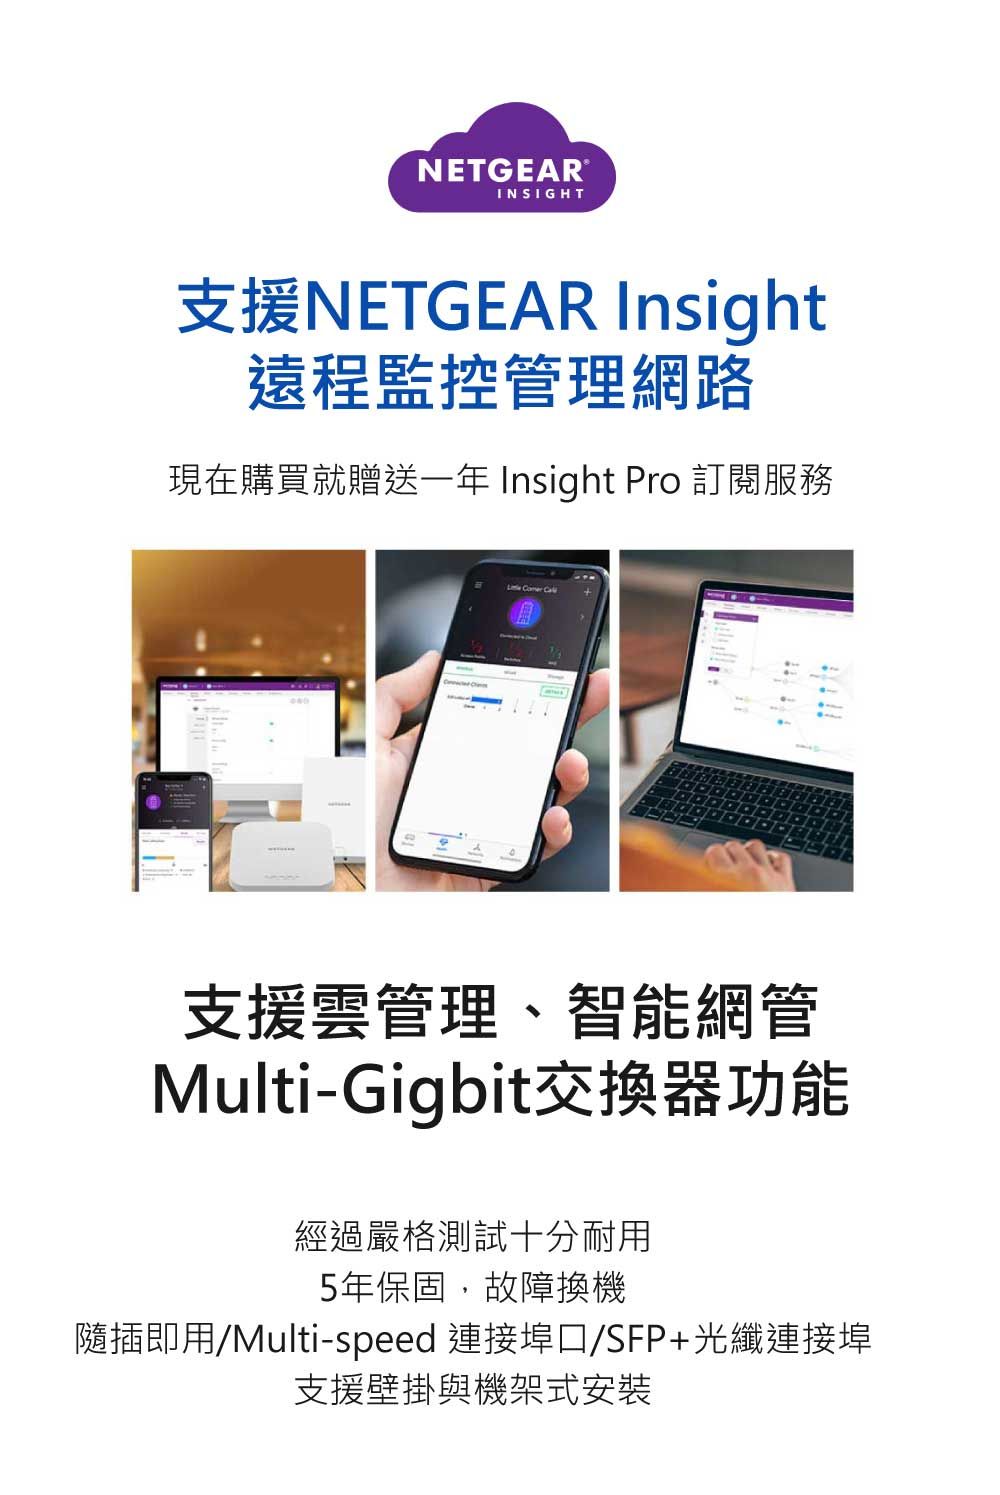 NETGEAR?INSIGHT䴩NETGEAR Insight{ʱ޲z{bʶRNذe@~ Insight Pro q\AȤ䴩޲zBMulti-Gigbit洫\gLYդQ@5~OT,GٴHY/Multi-speed s/SFP+ֳs䴩P[w